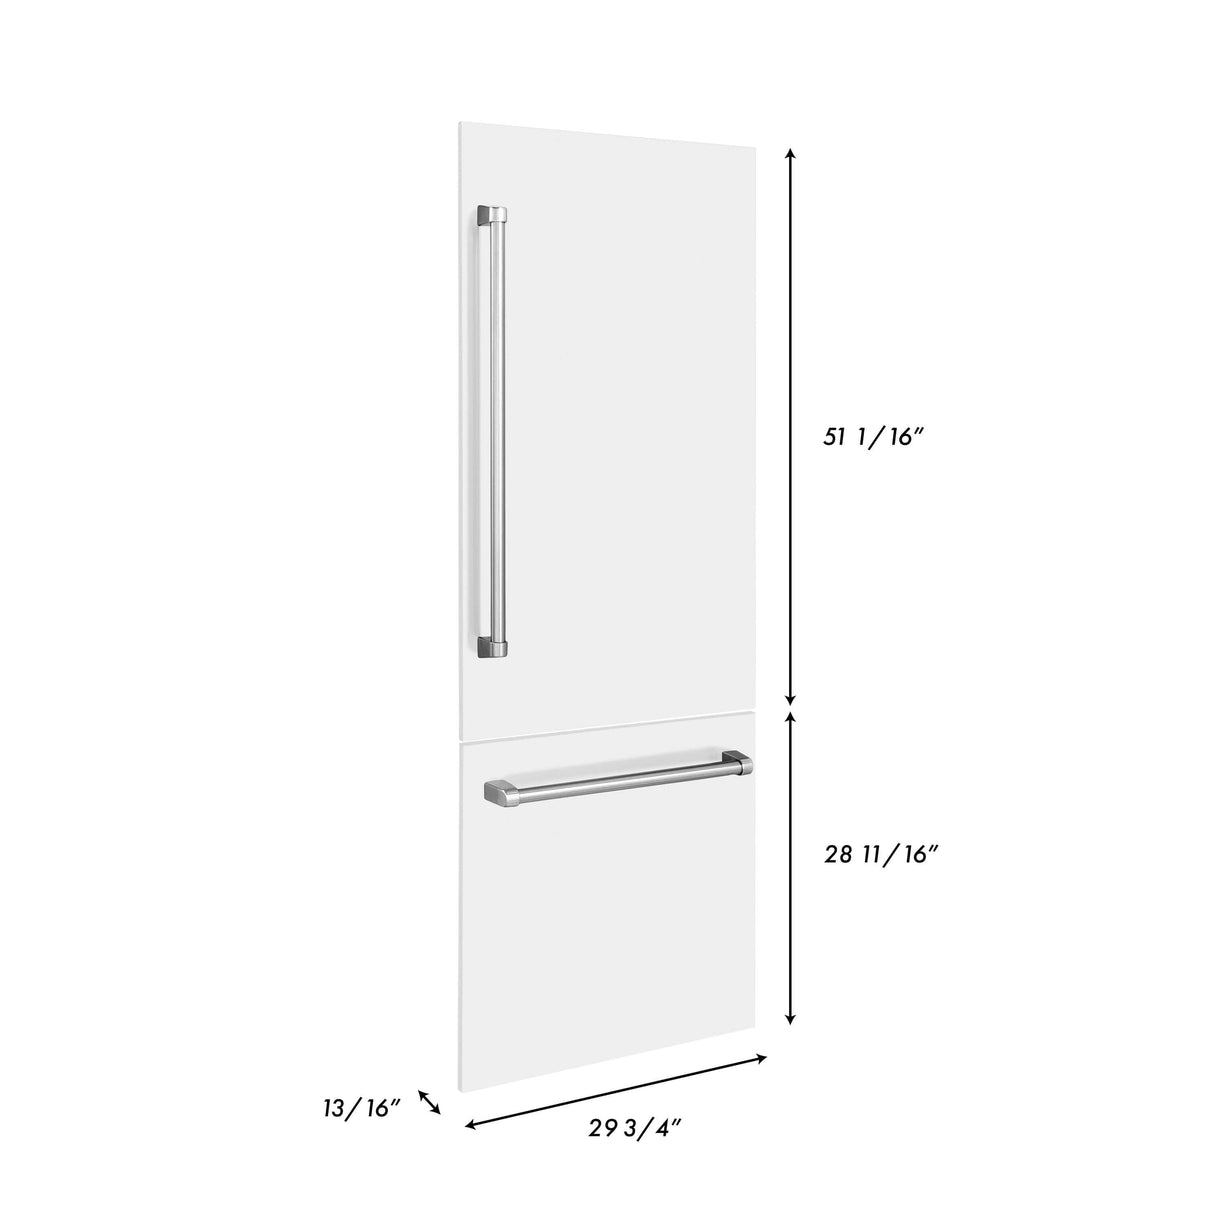 ZLINE 30 in. Refrigerator Panels and Handles in White Matte for Built-in Refrigerators (RPBIV-WM-30)